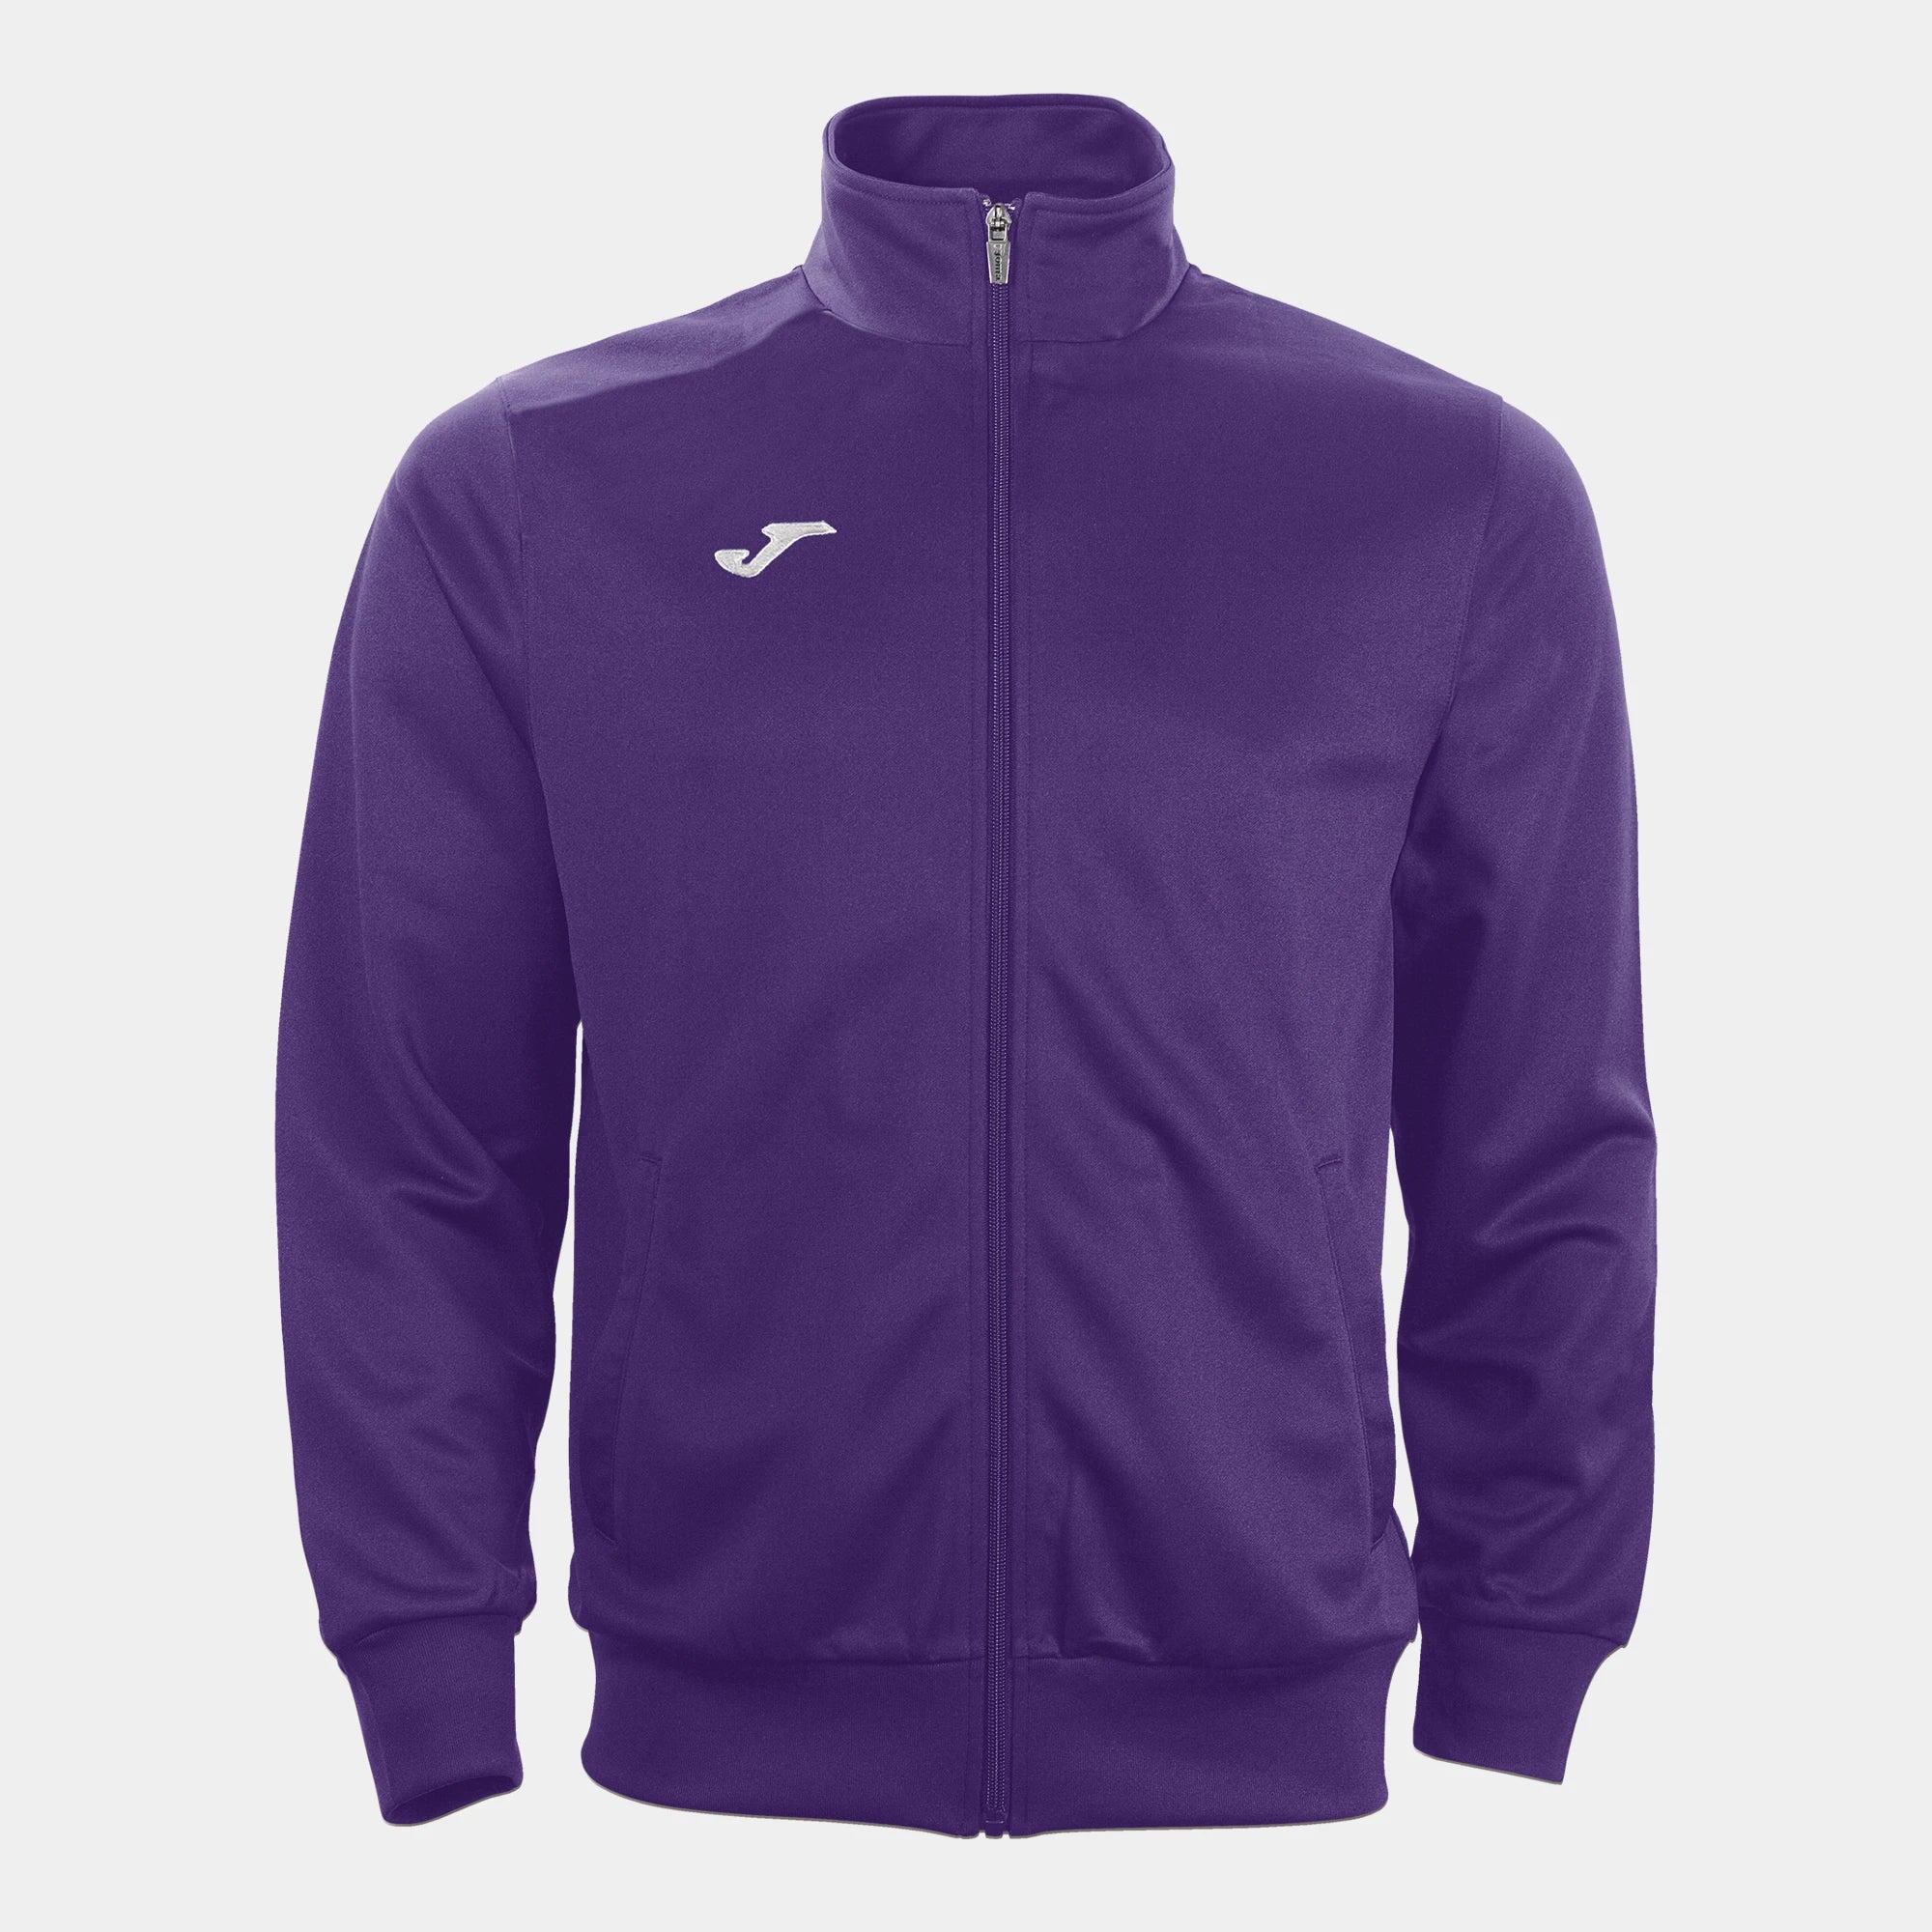 Comprar purple Joma Gala Full Zip Sweatshirt